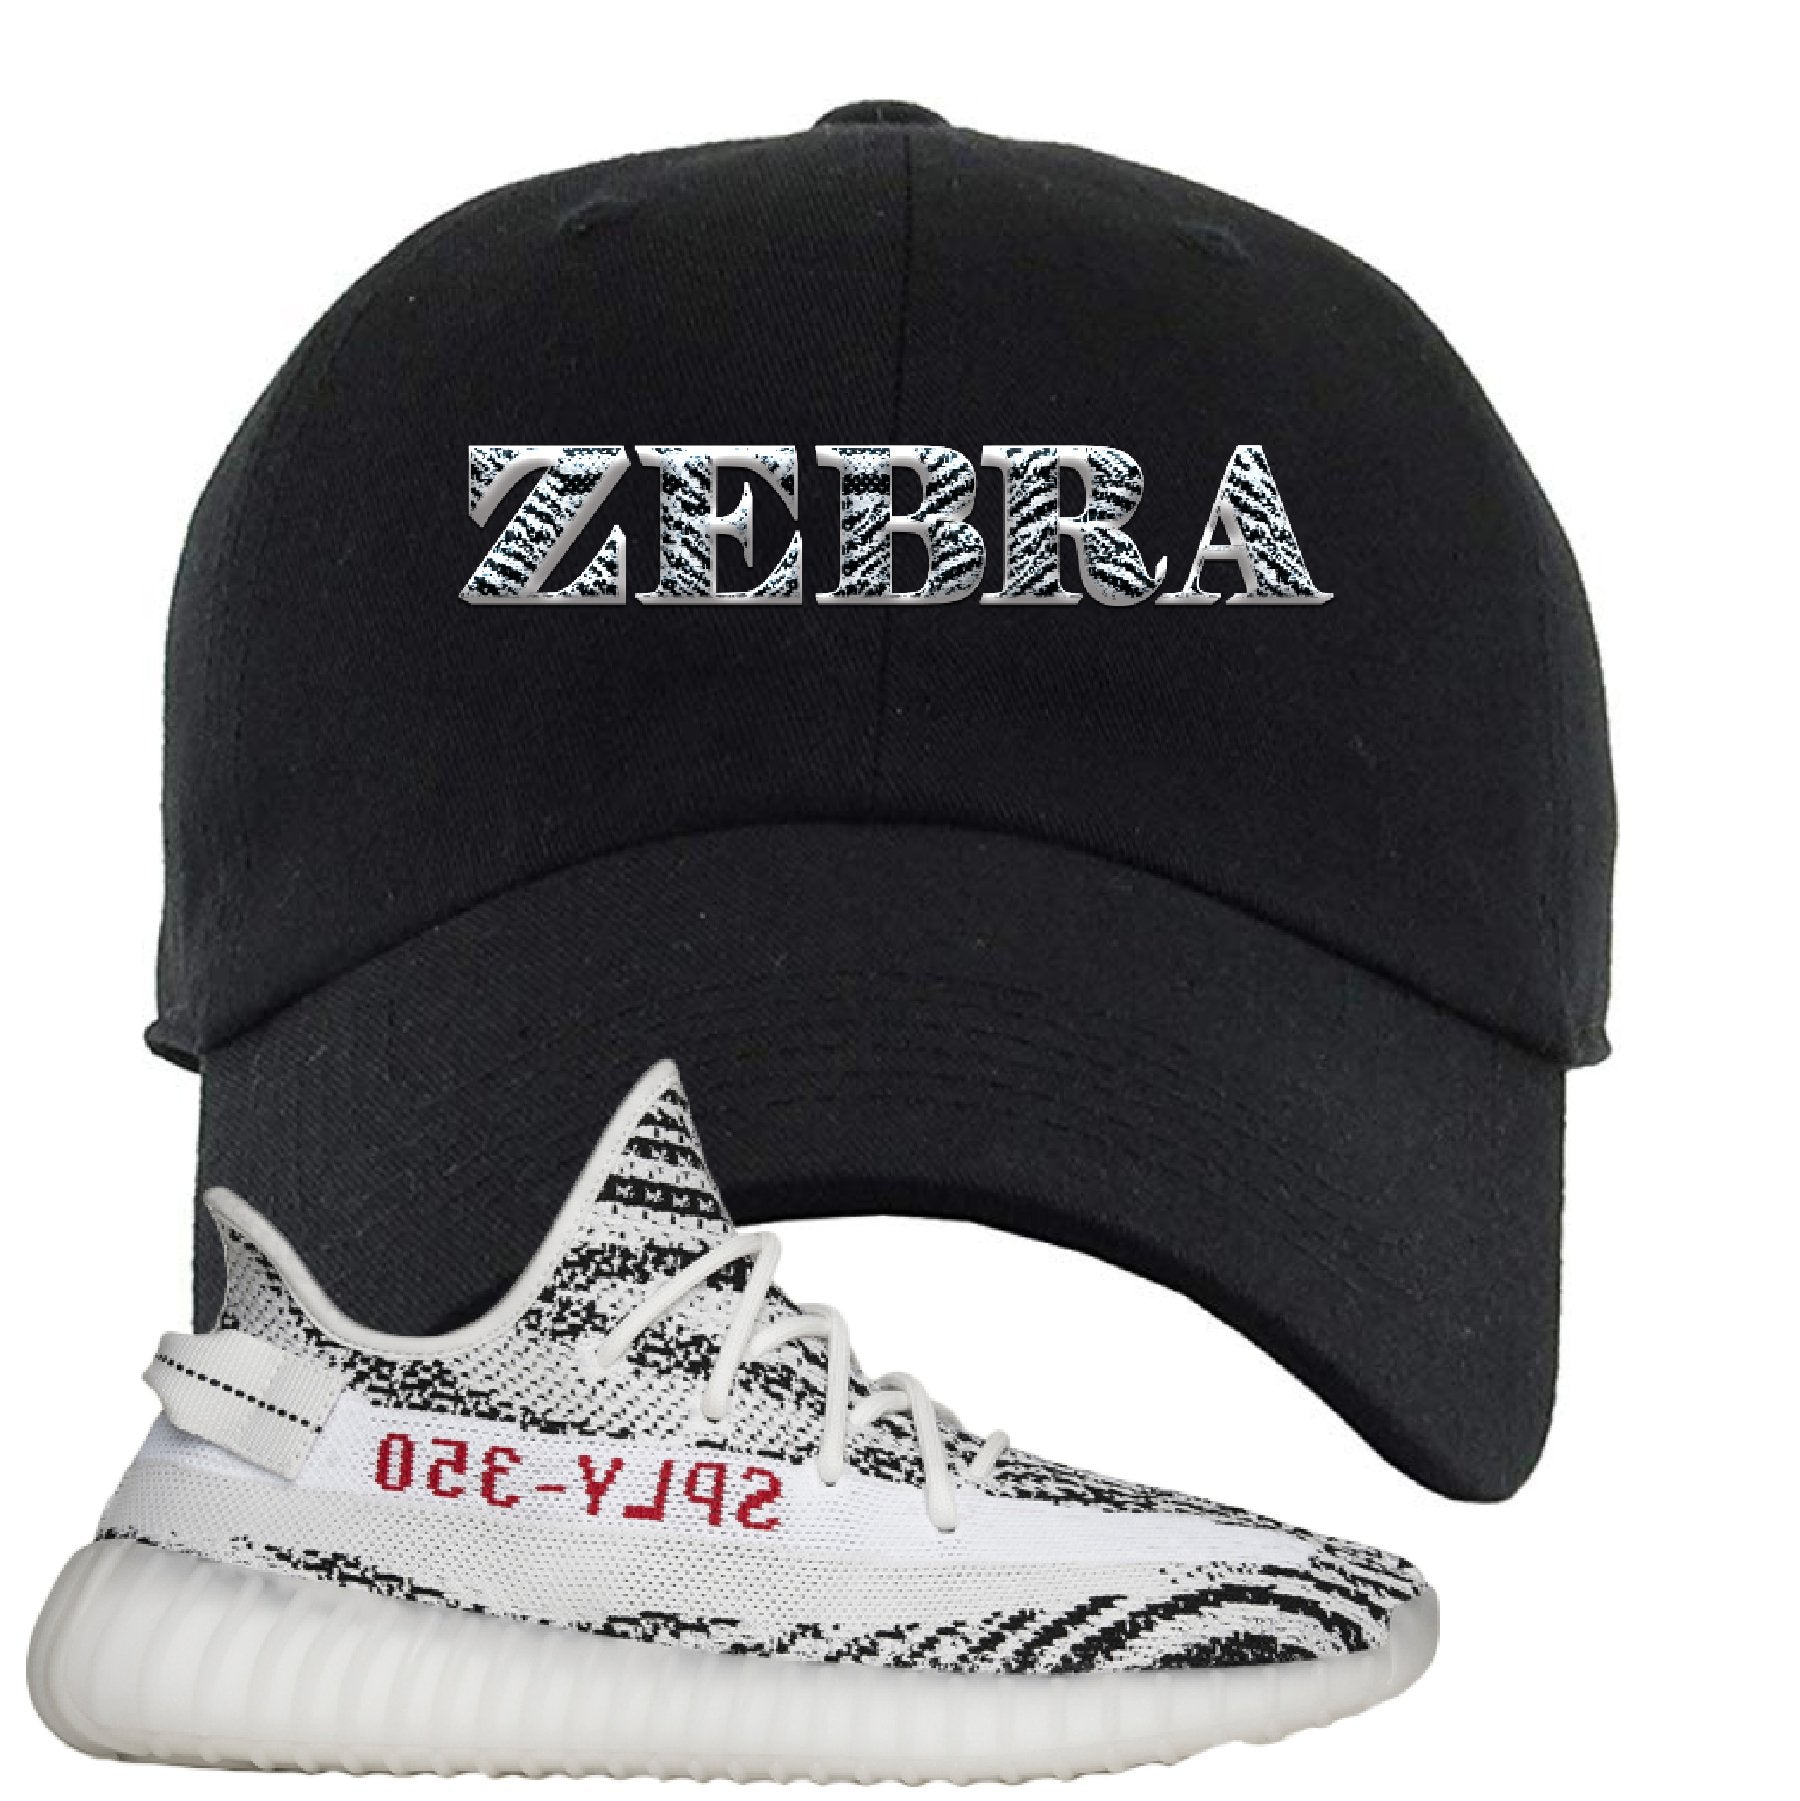 Yeezy Boost 350 V2 Zebra Zebra Black Sneaker Hook Up Dad Hat